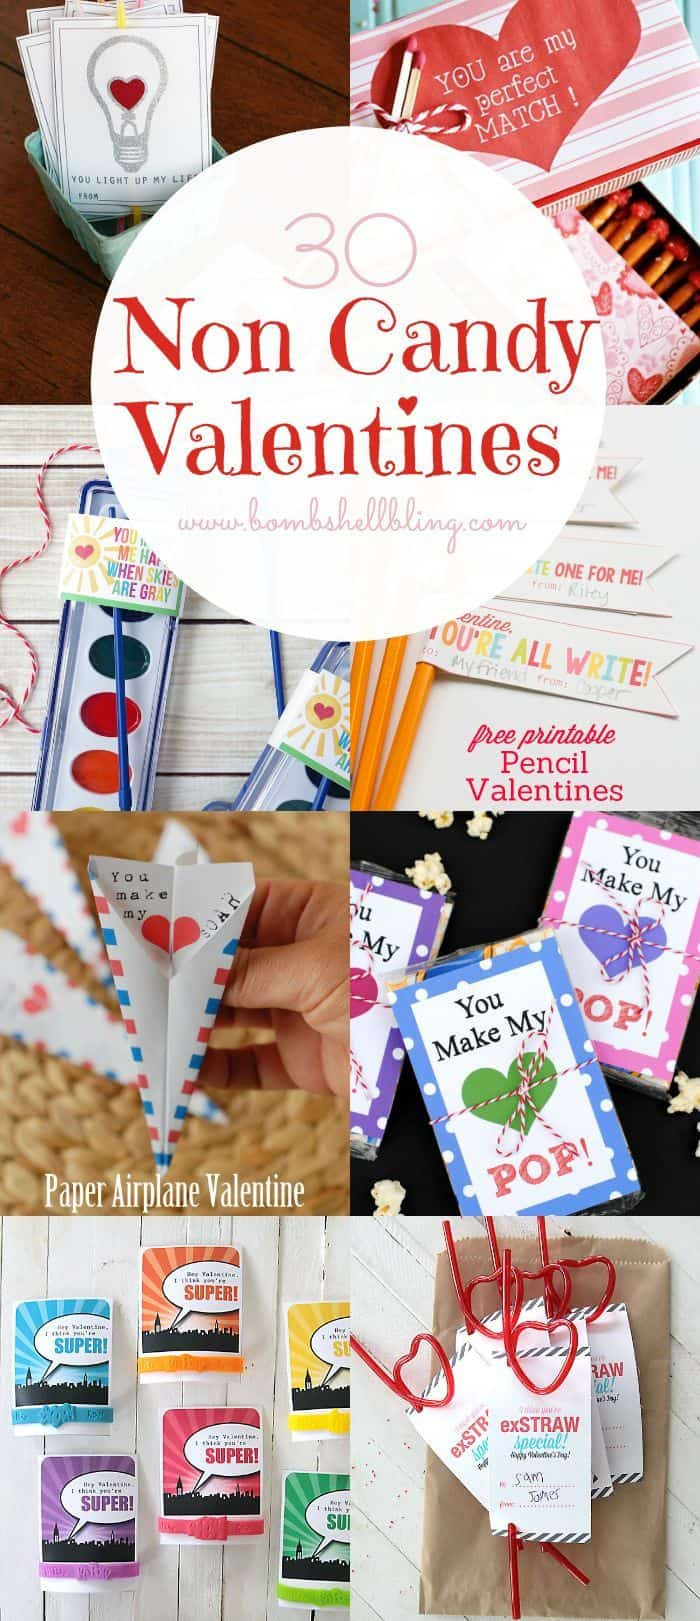 Child Valentine Gift Ideas
 10 Non Candy Valentine s Day Gift Ideas for Kids